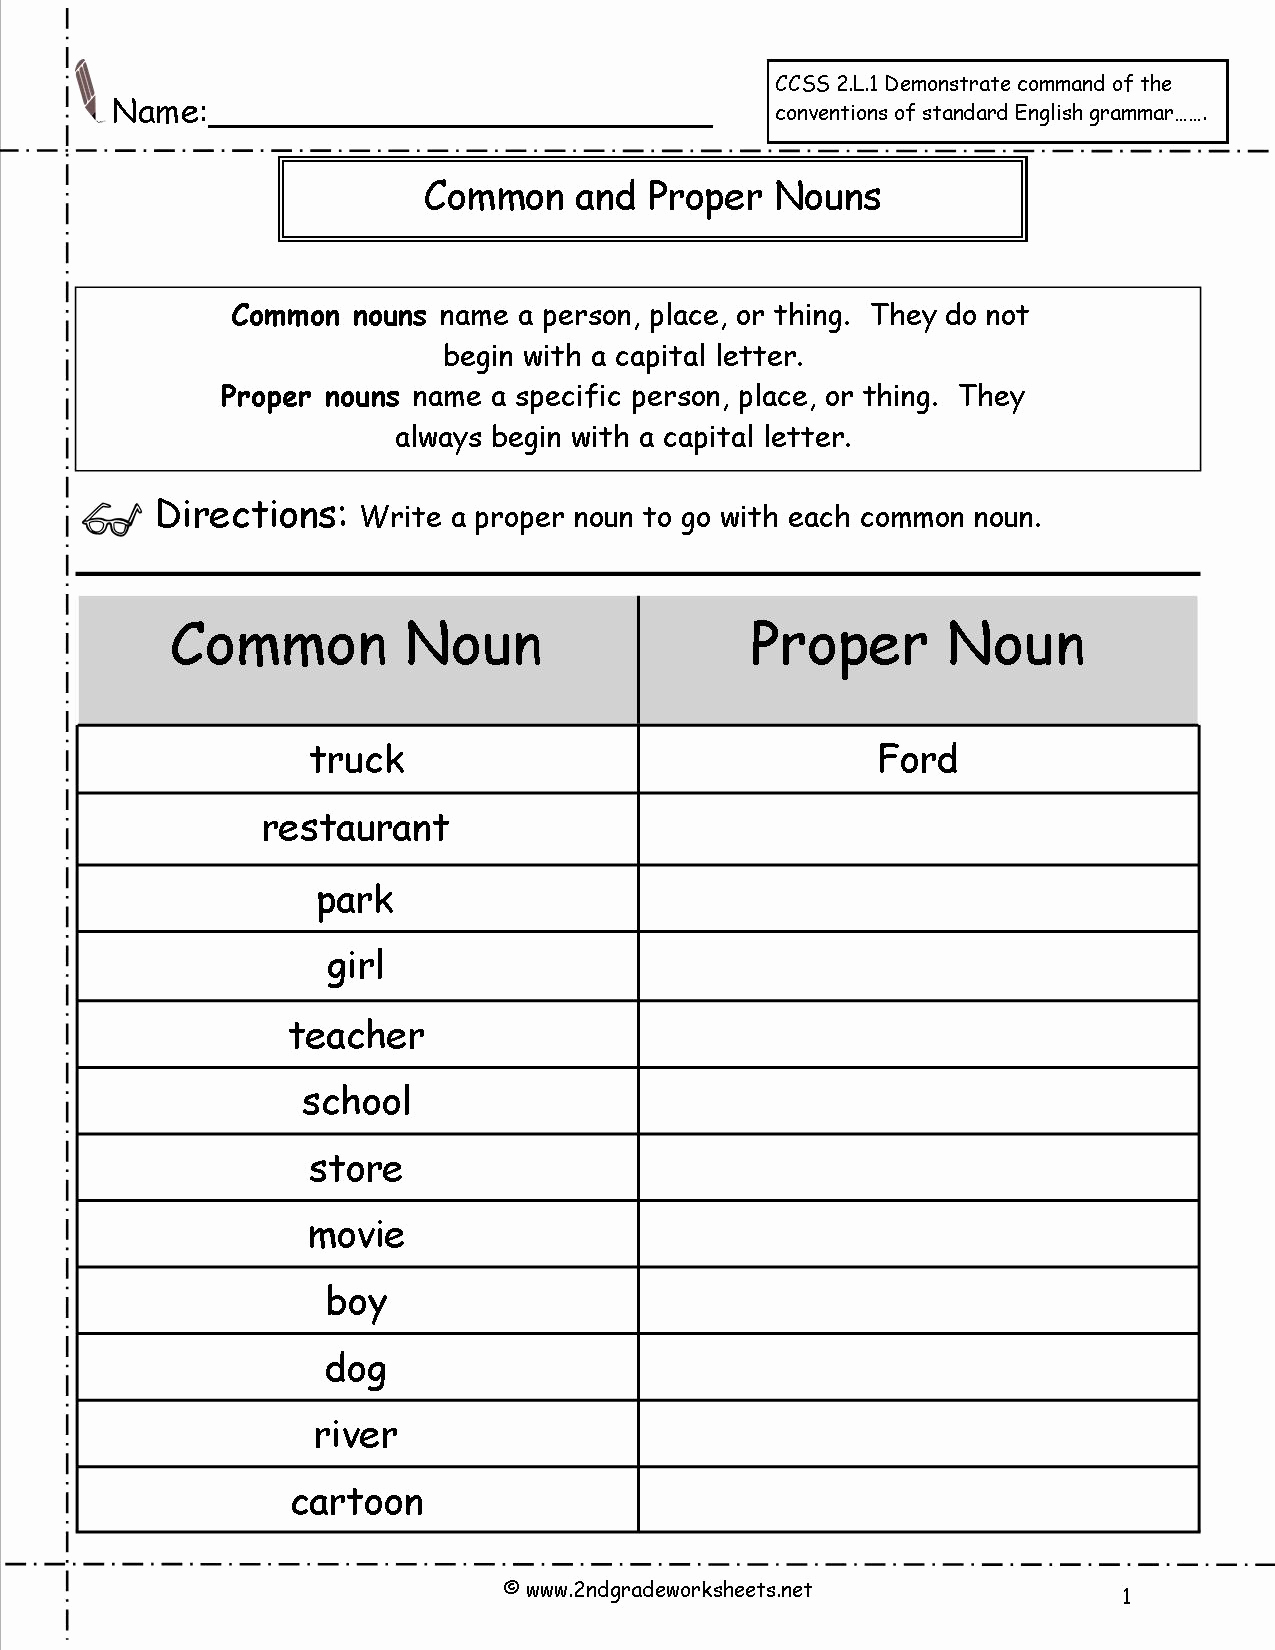 Free Proper Noun Worksheets Luxury 18 Best Of Proper Noun Worksheets for First Grade